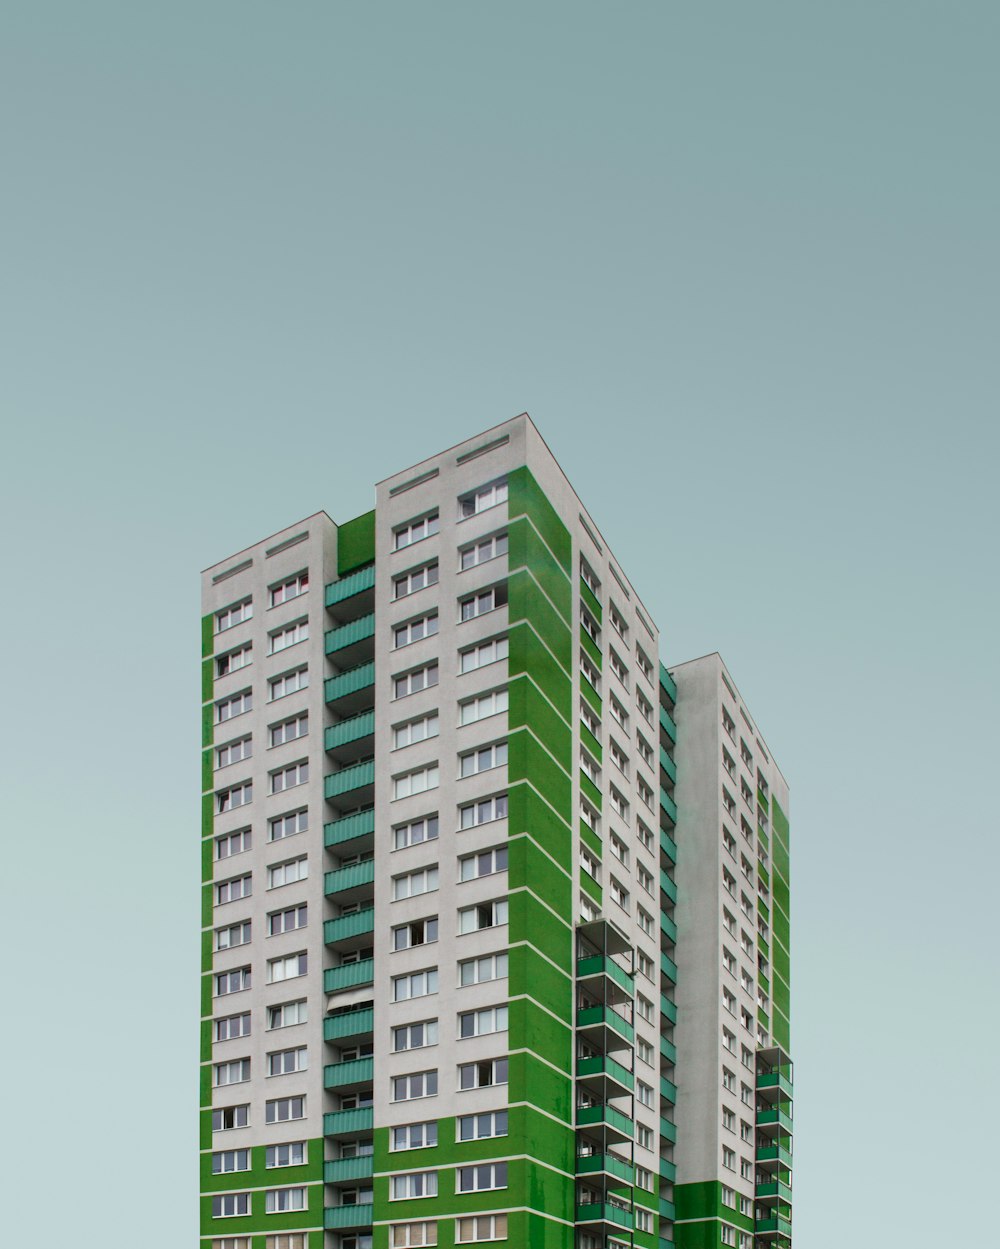 Edifício alto de concreto verde e branco durante o dia